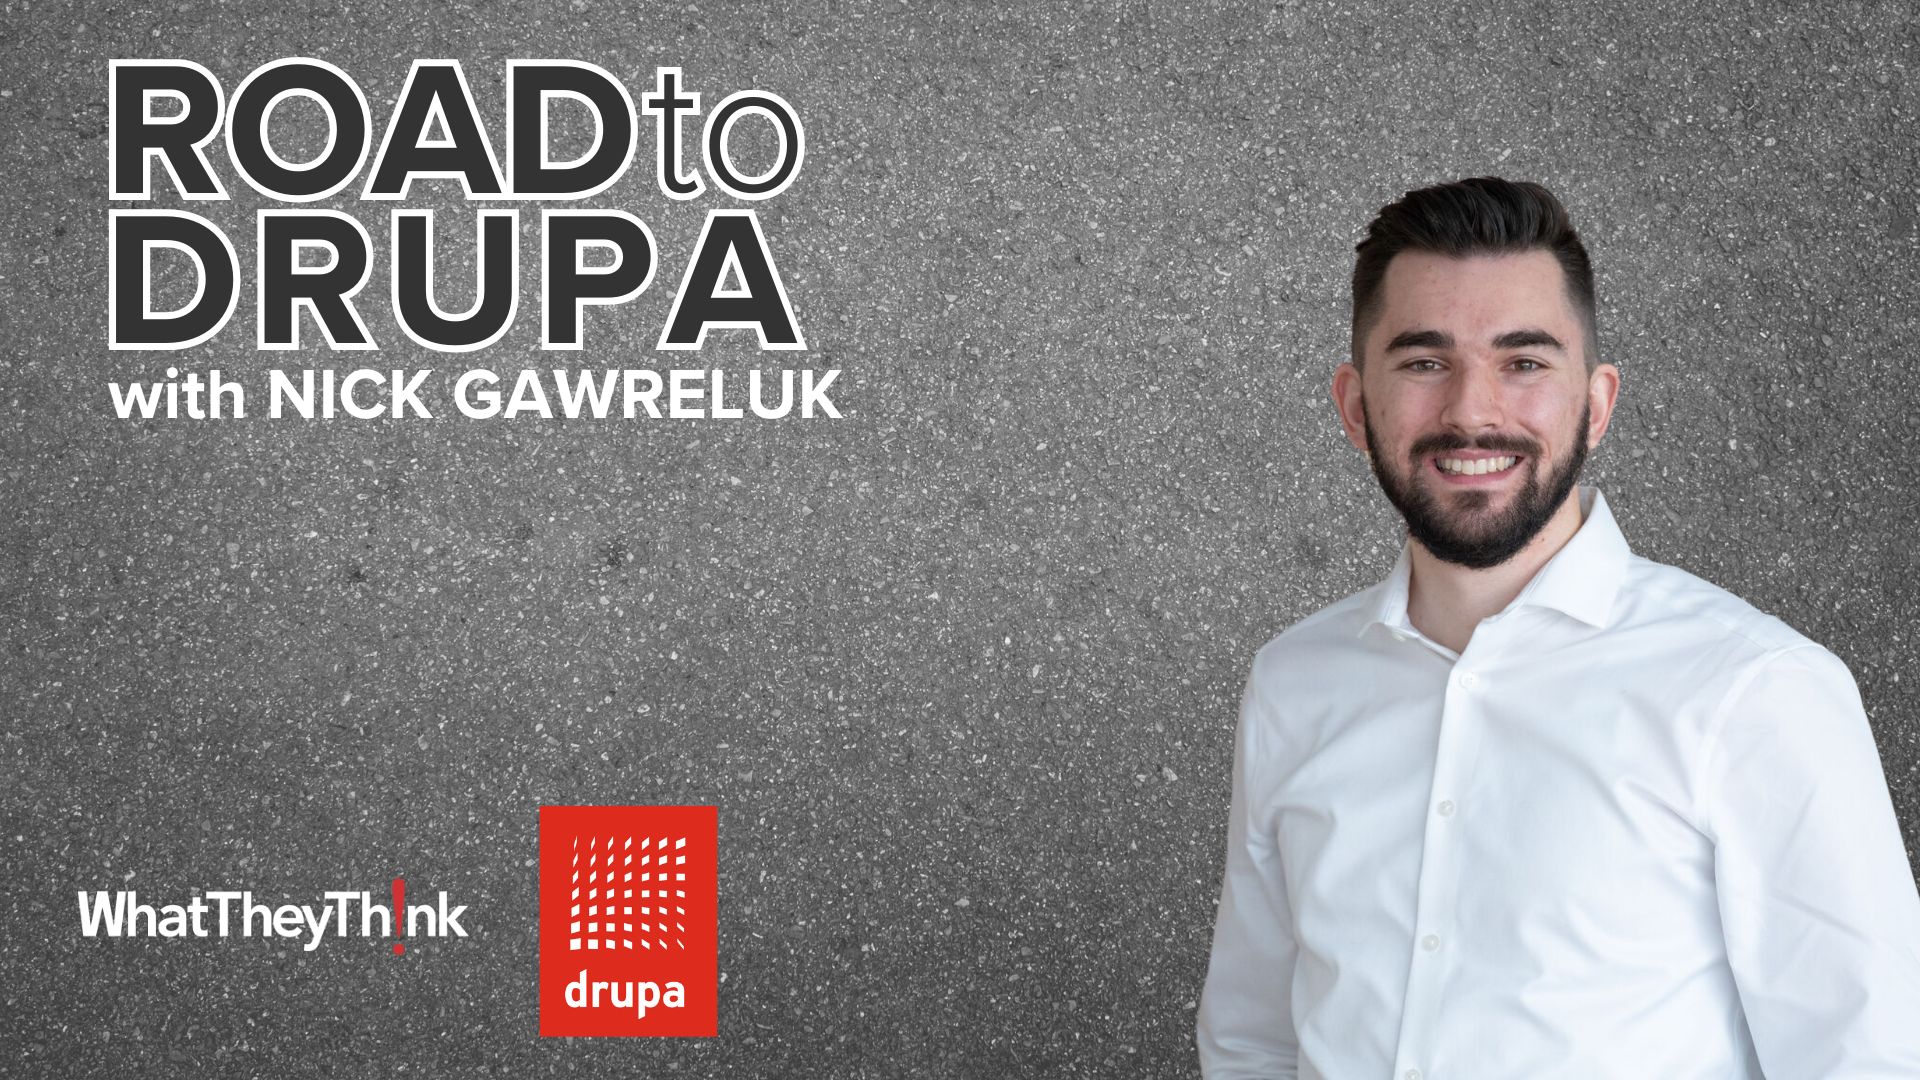 Nick Gawreluk’s Personal Road to drupa